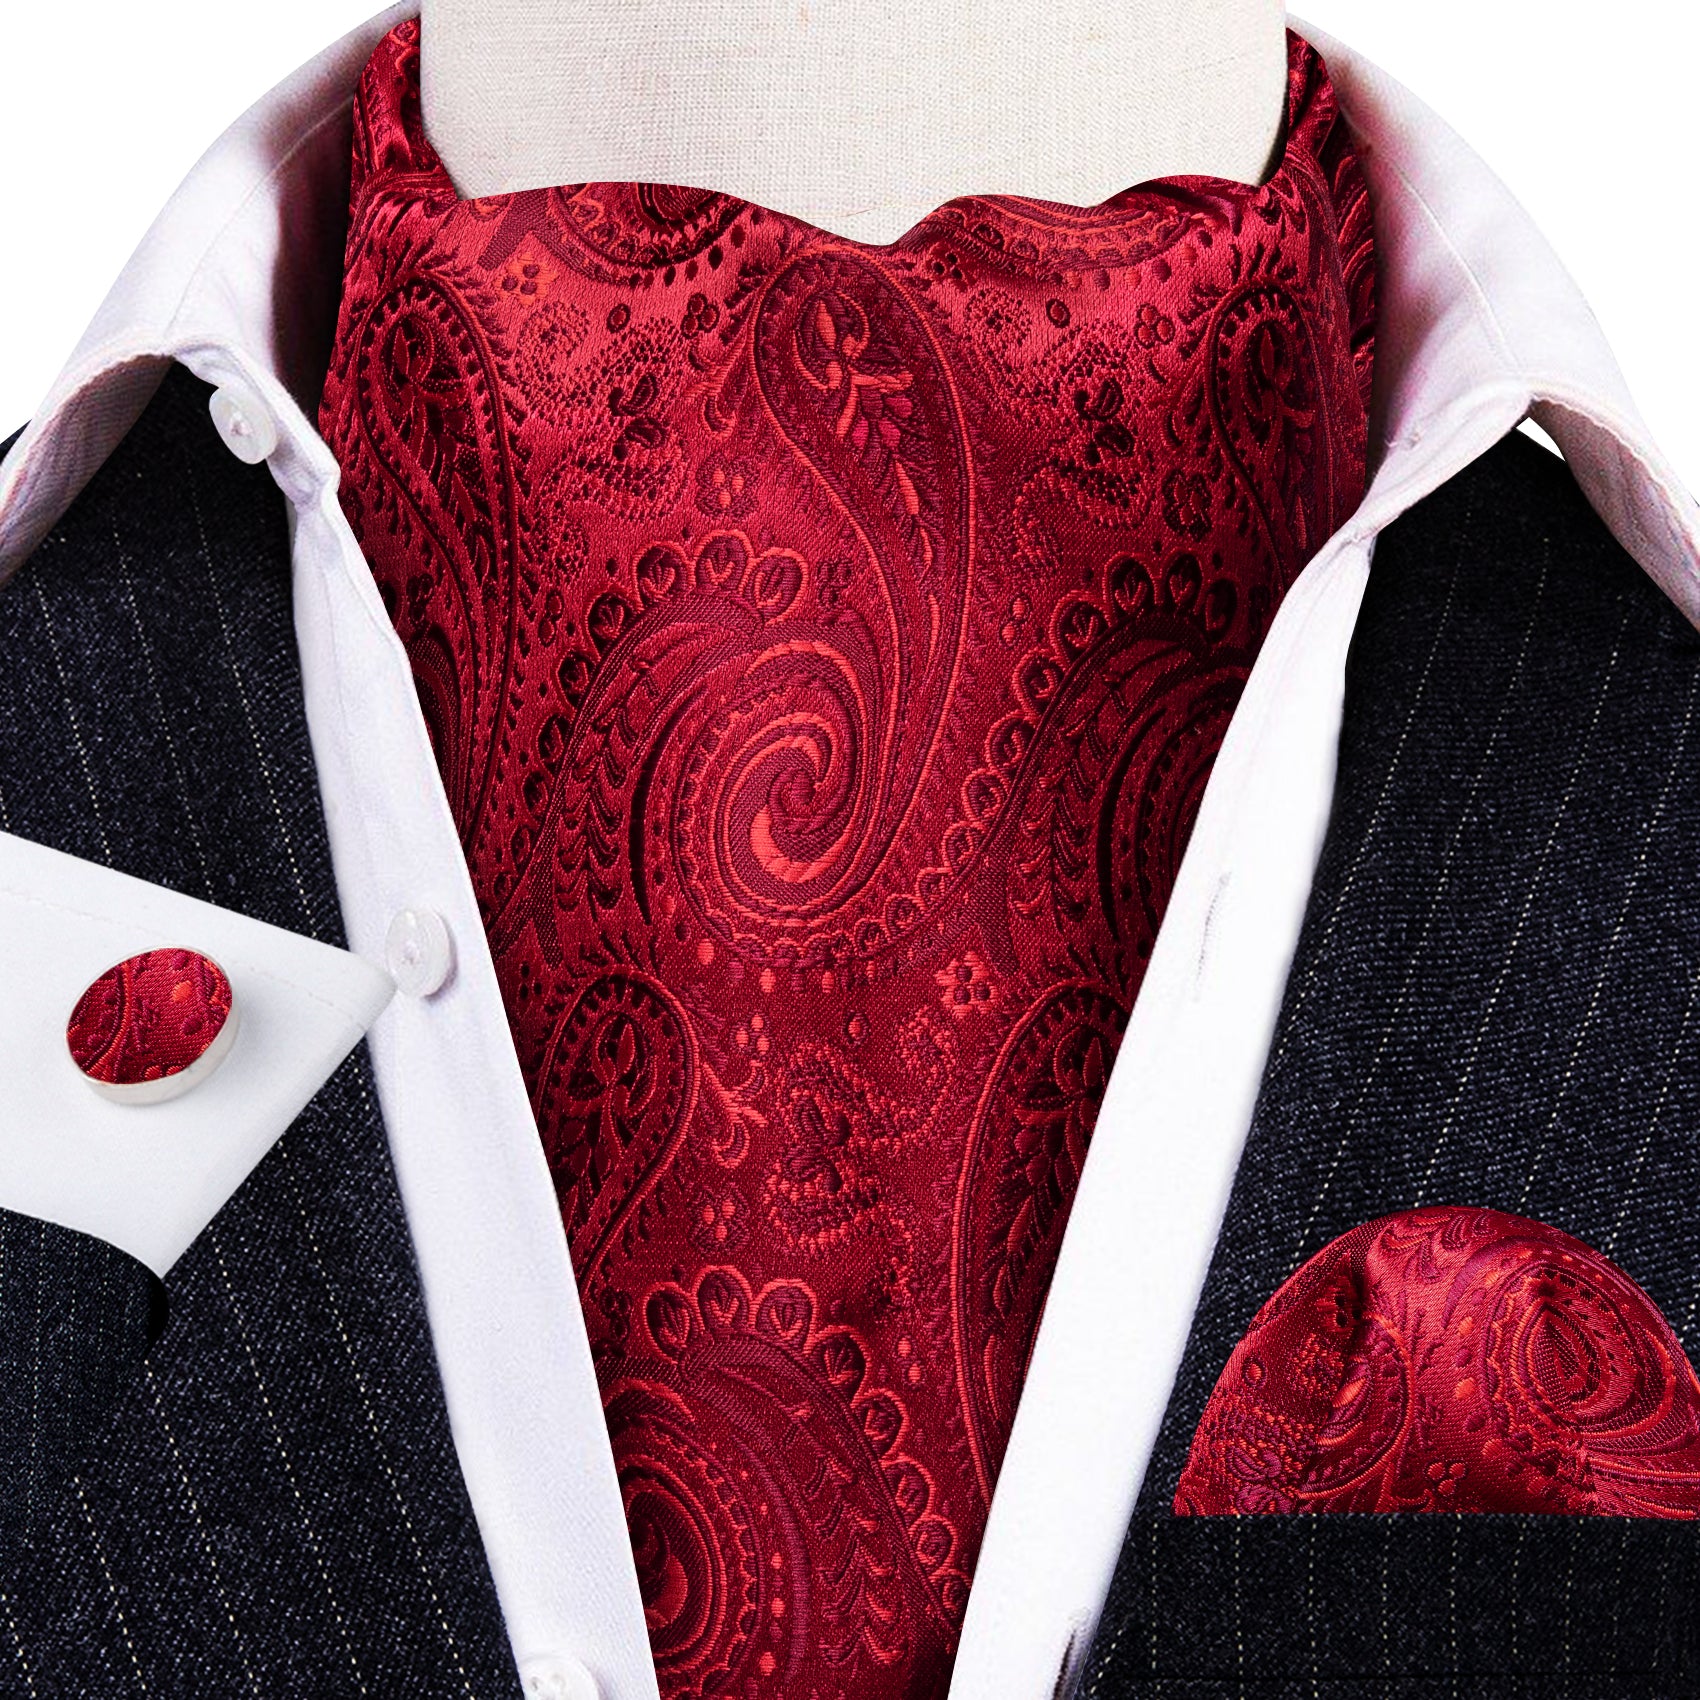 Barry.wang Red Tie Paisley Silk Men's Ascot Handkerchief Cufflinks for Wedding